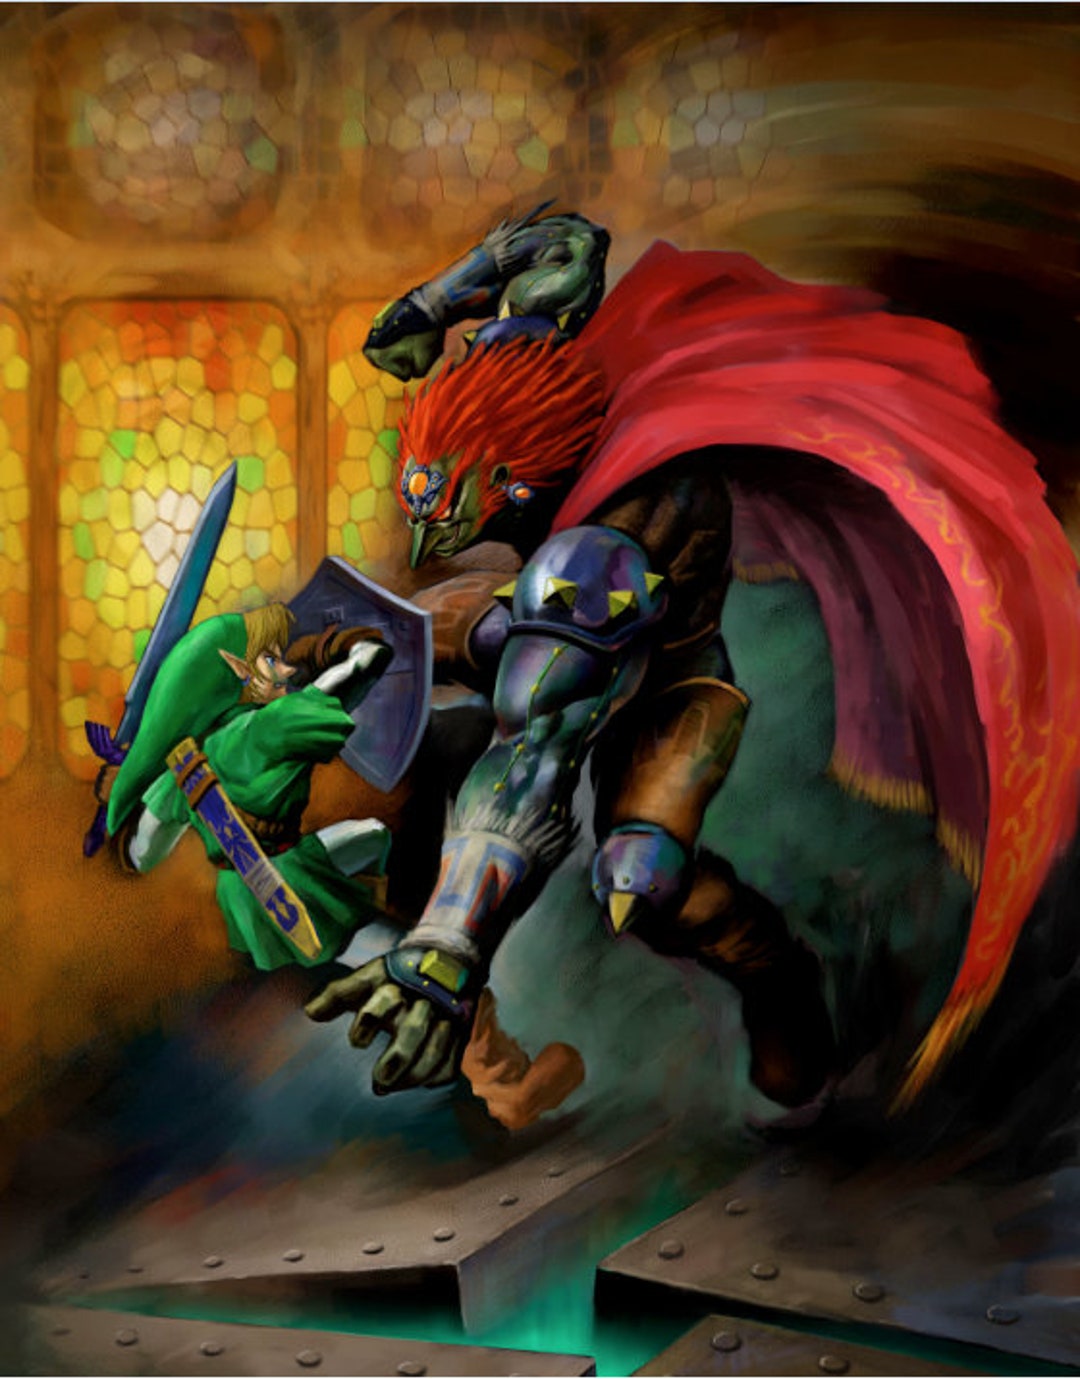 Link (The Legend of Zelda: Ocarina of Time) by VixDojoFox on